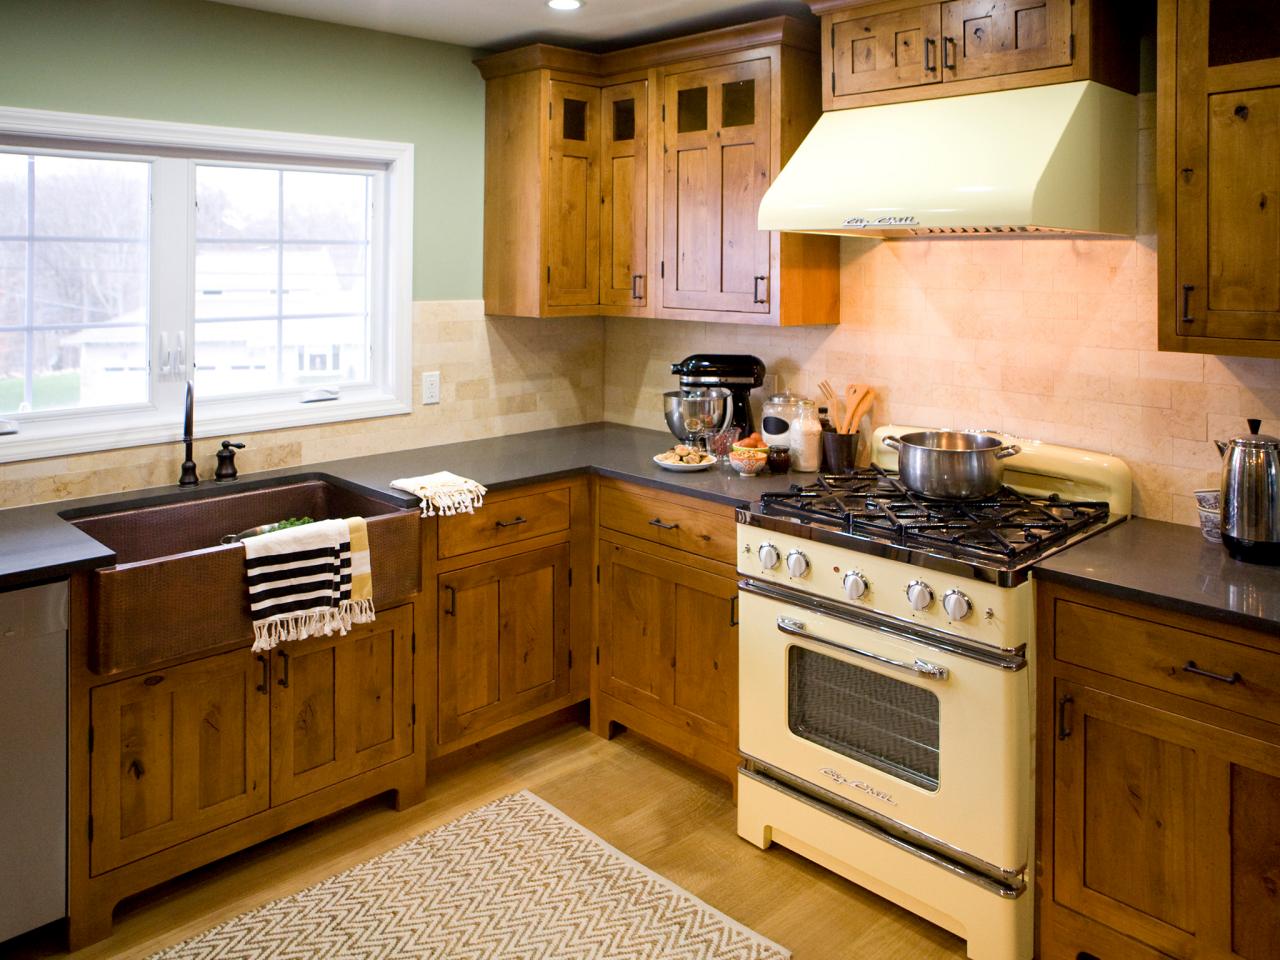 Amenajarea unei bucatarii in stil rustic rustic style kitchen design ideas 6